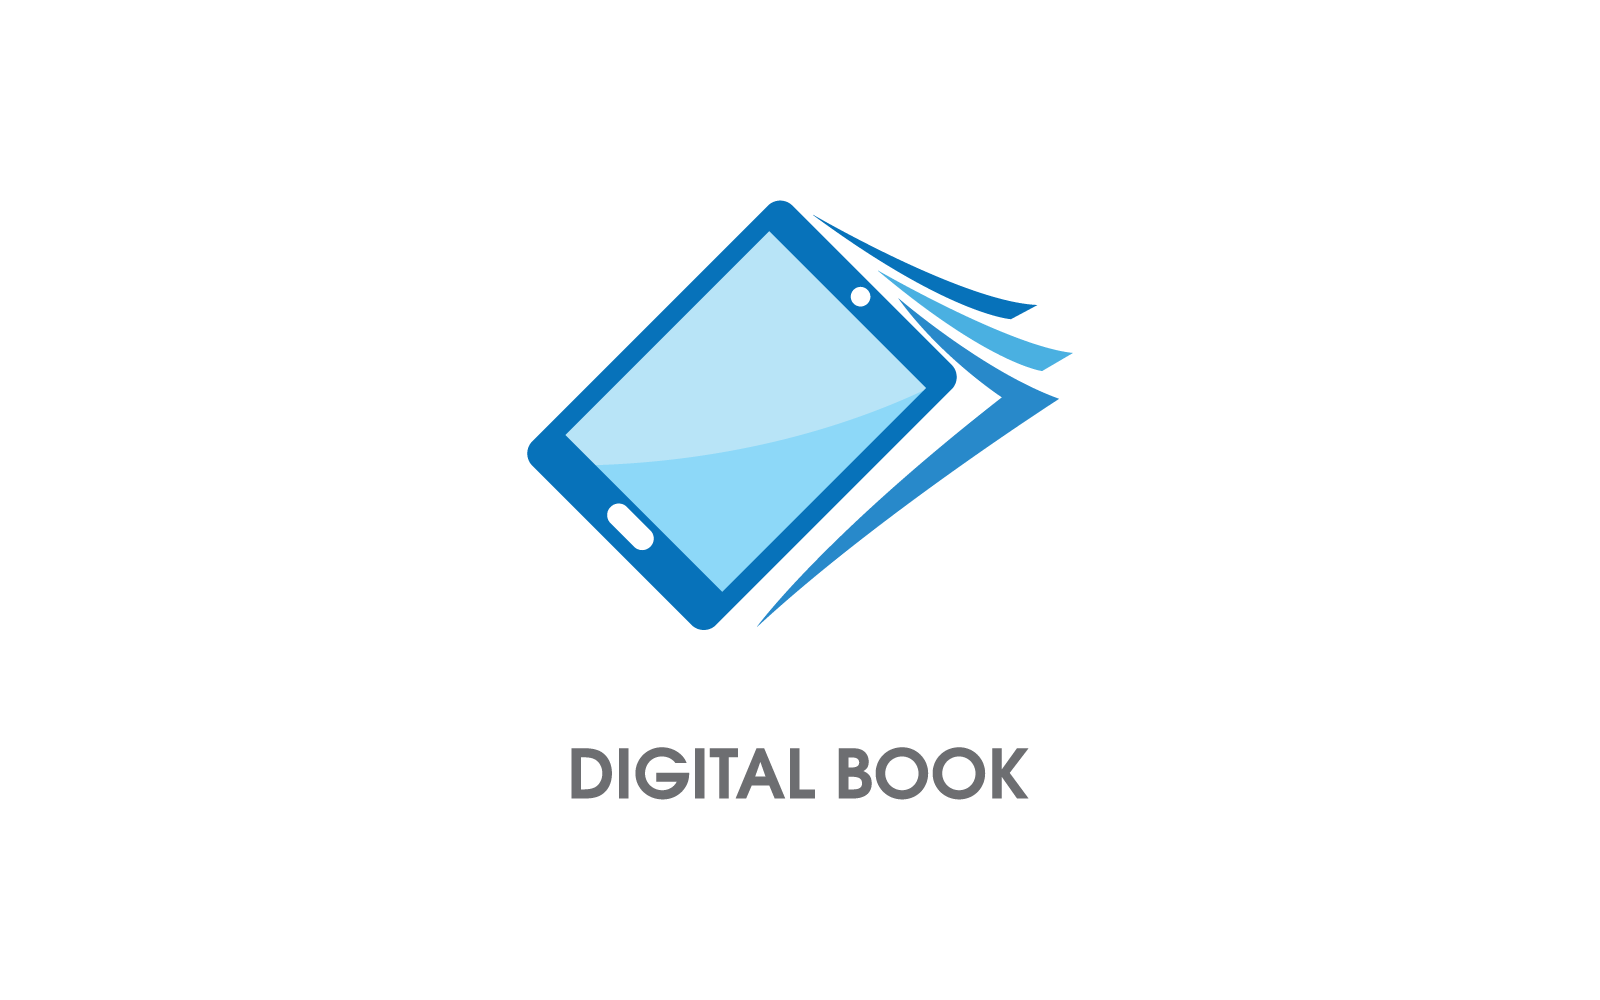 E-boek moderne digitale boek logo ontwerp vector